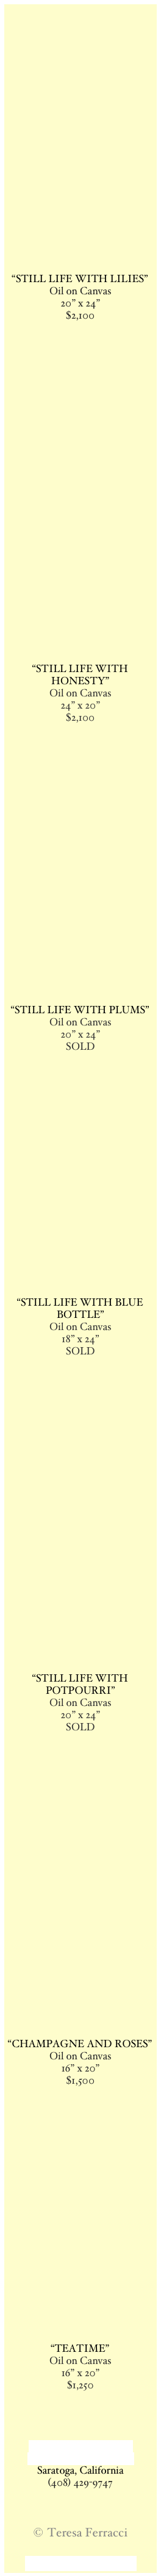 























“STILL LIFE WITH LILIES”
Oil on Canvas
20” x 24”
$2,100




























“STILL LIFE WITH HONESTY”
Oil on Canvas
24” x 20”
$2,100























“STILL LIFE WITH PLUMS”
Oil on Canvas
20” x 24”
SOLD




















“STILL LIFE WITH BLUE BOTTLE”
Oil on Canvas
18” x 24”
SOLD


























“STILL LIFE WITH POTPOURRI”
Oil on Canvas
20” x 24”
SOLD

























“CHAMPAGNE AND ROSES”
Oil on Canvas
16” x 20”
$1,500





















“TEATIME”
Oil on Canvas
16” x 20”
$1,250




tferracci@sbcglobal.net
www.teresaferracci.com
Saratoga, California
(408) 429-9747



© Teresa Ferracci

Back to Main Gallery